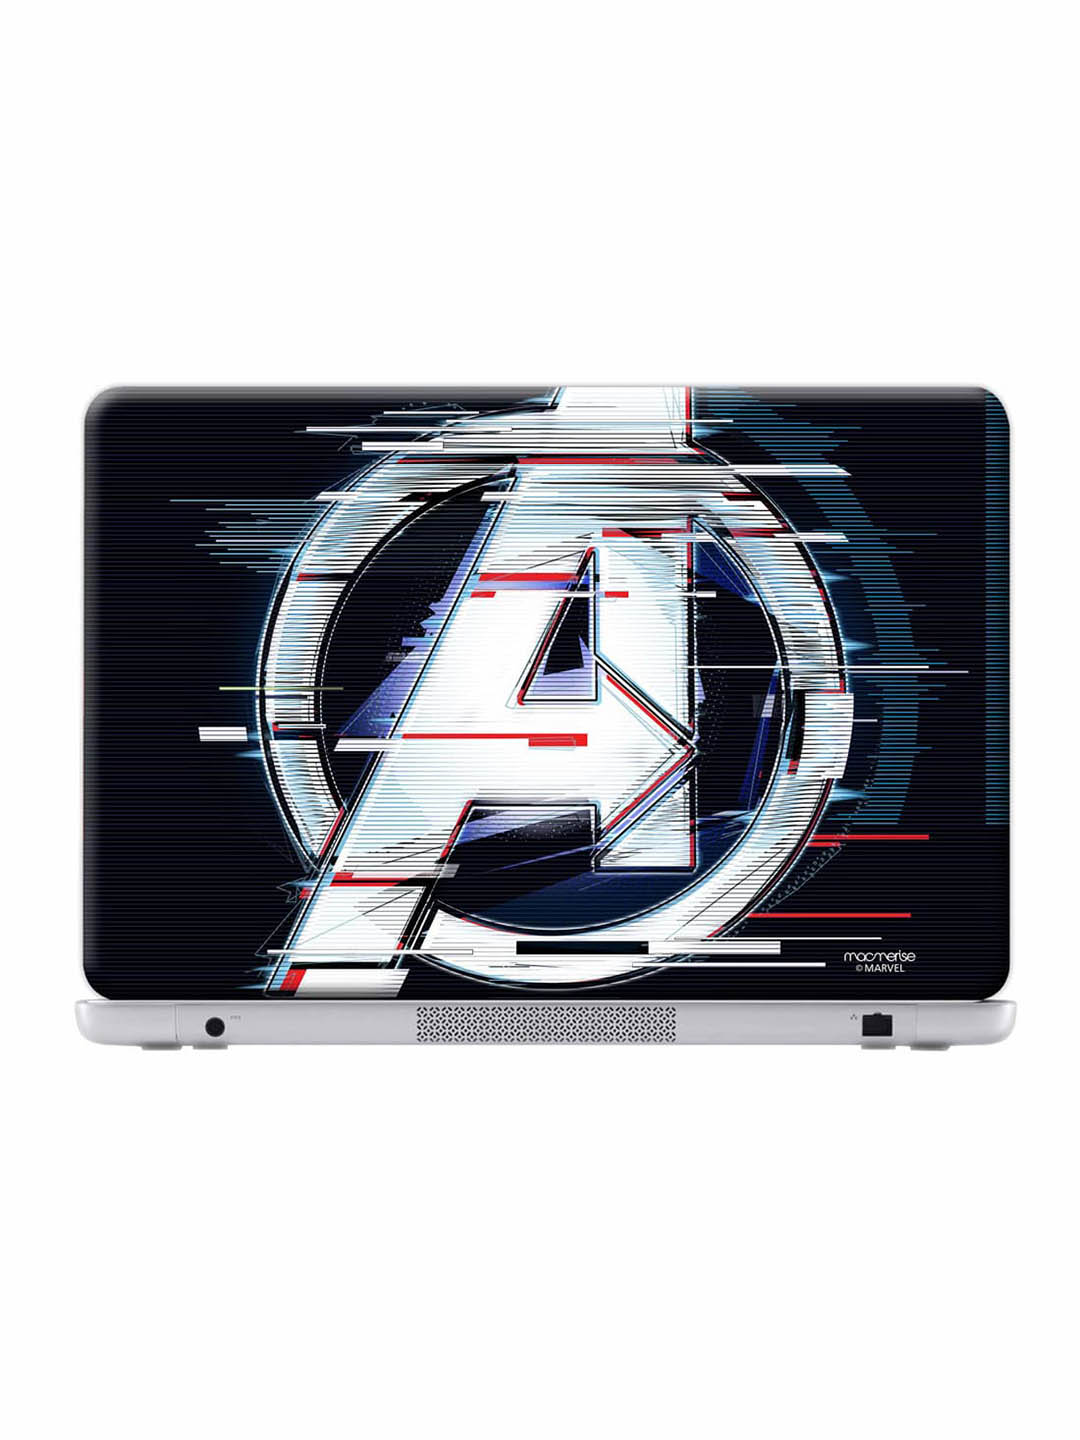 Had a little fun editing the avengers logo : r/Avengers